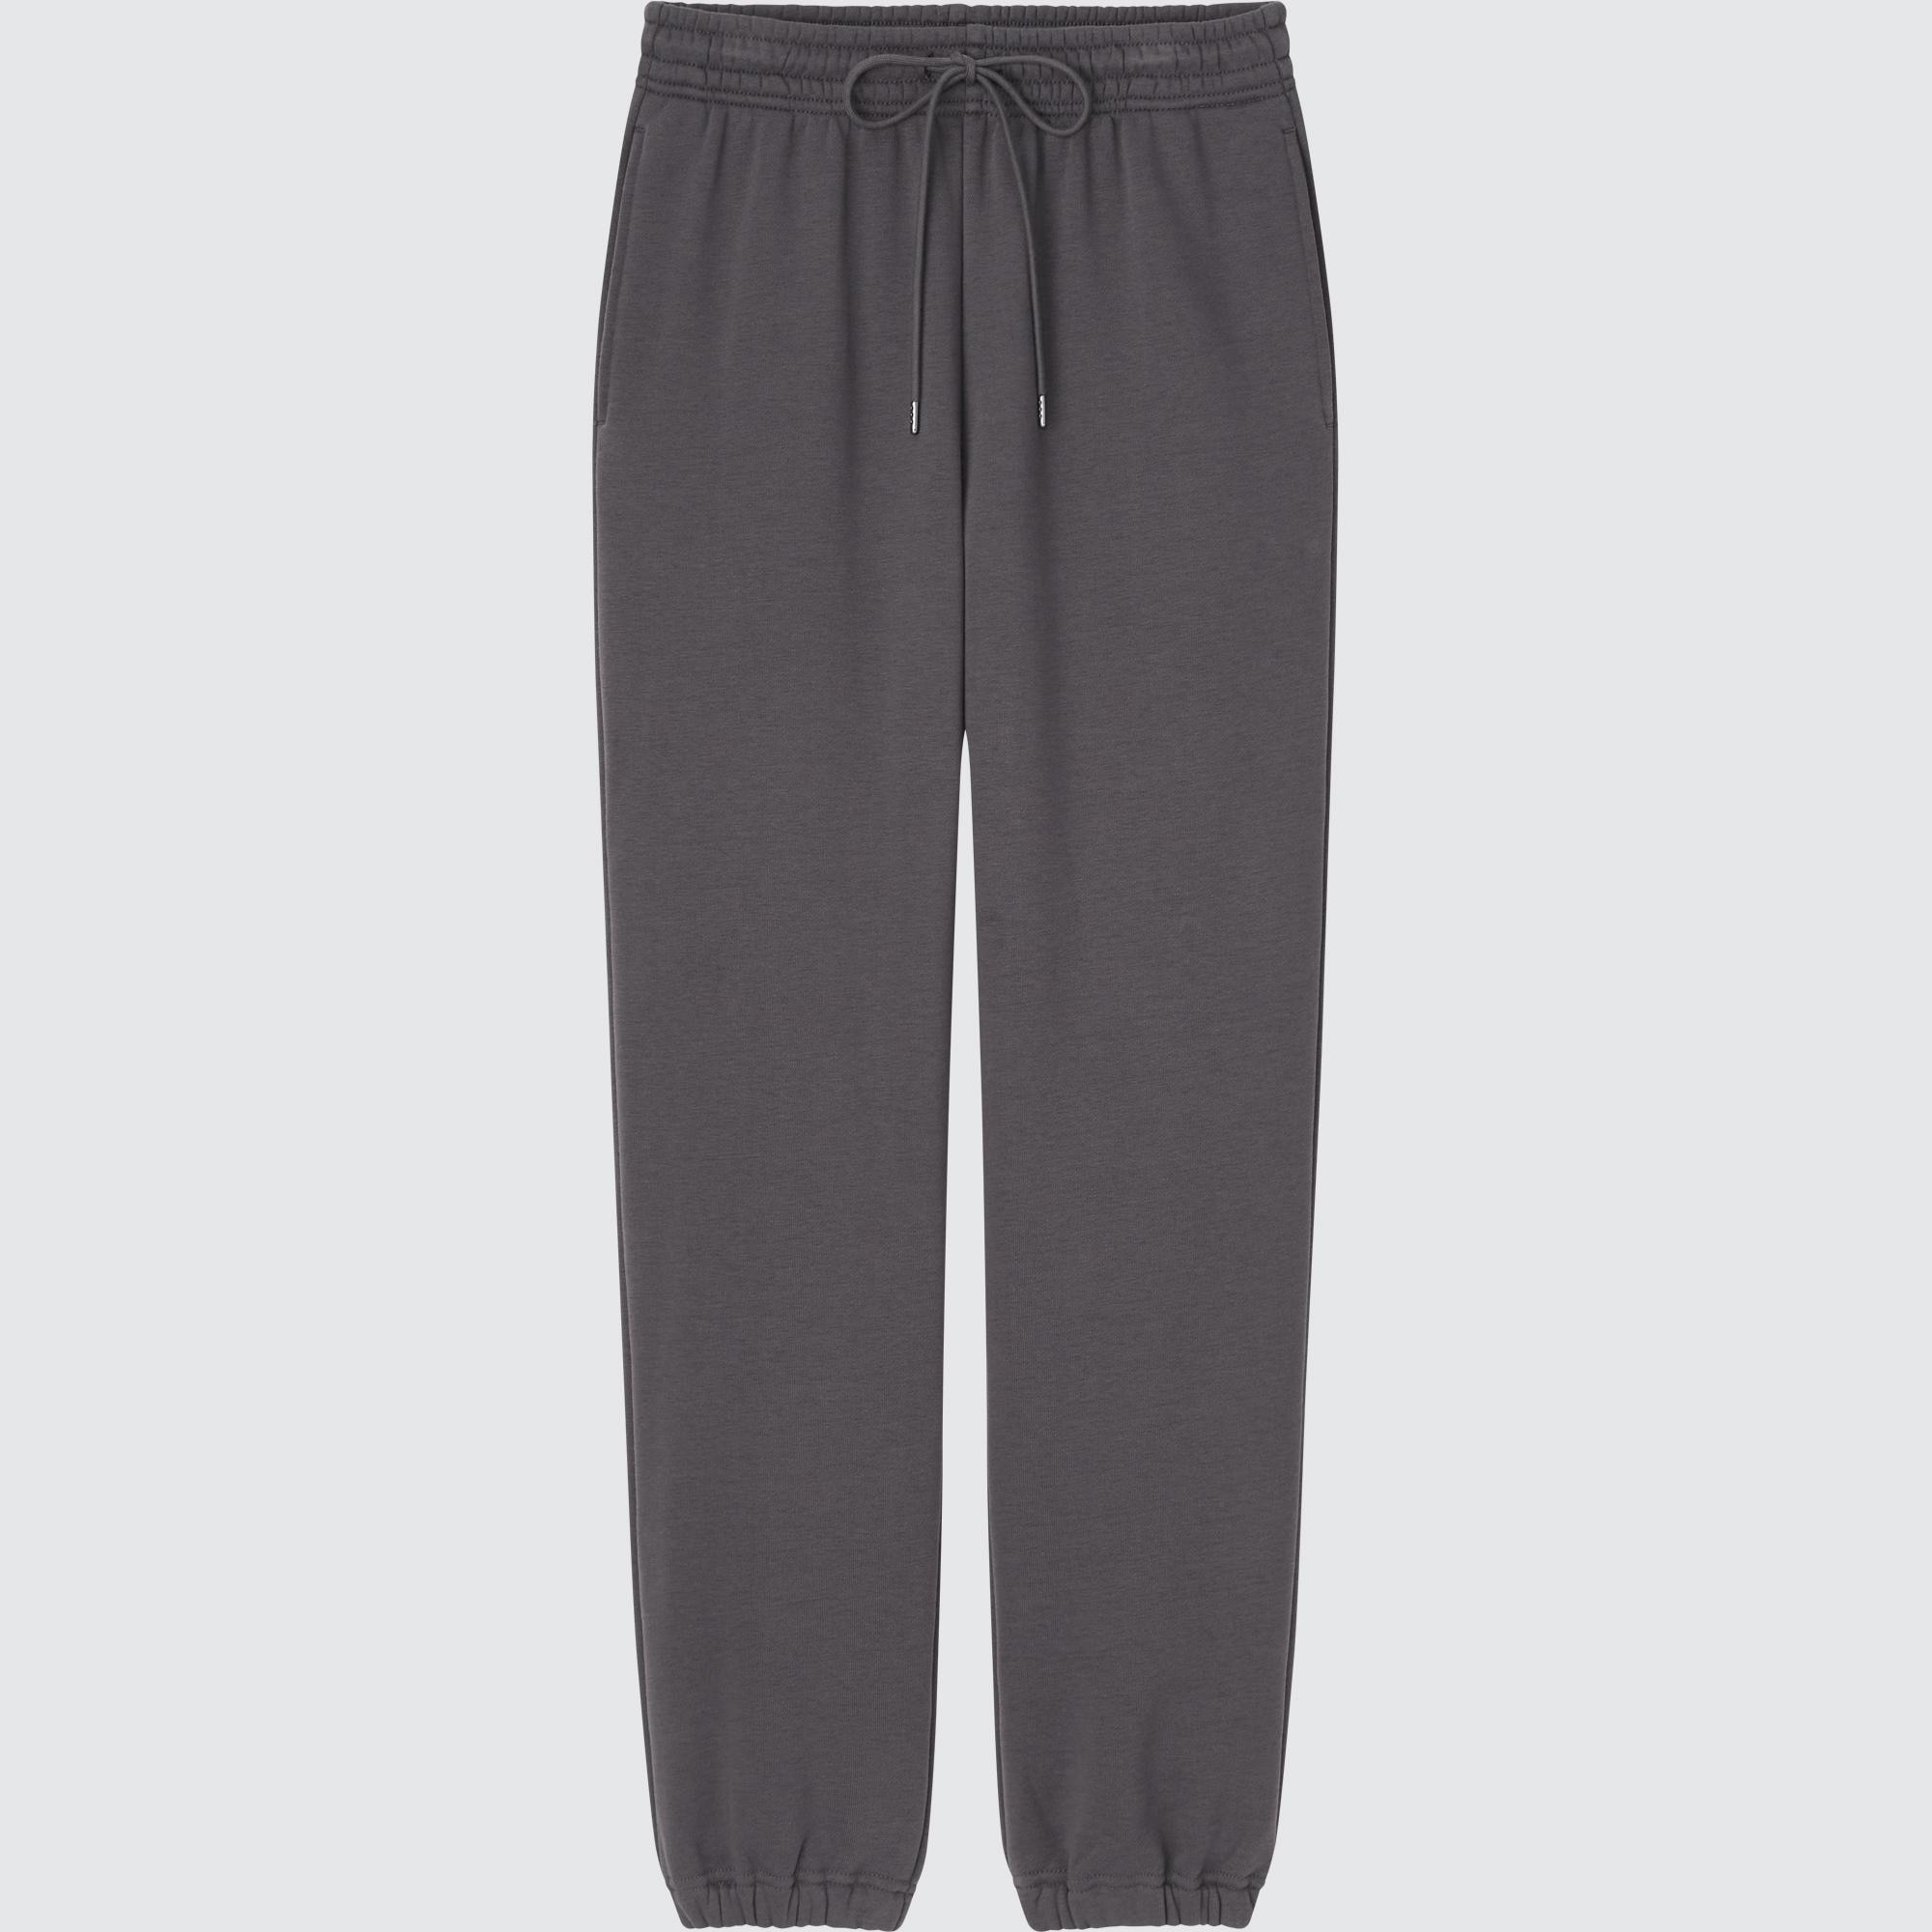 Compre UNIQLO sweatpants (leg length 70-72 cm, long length)